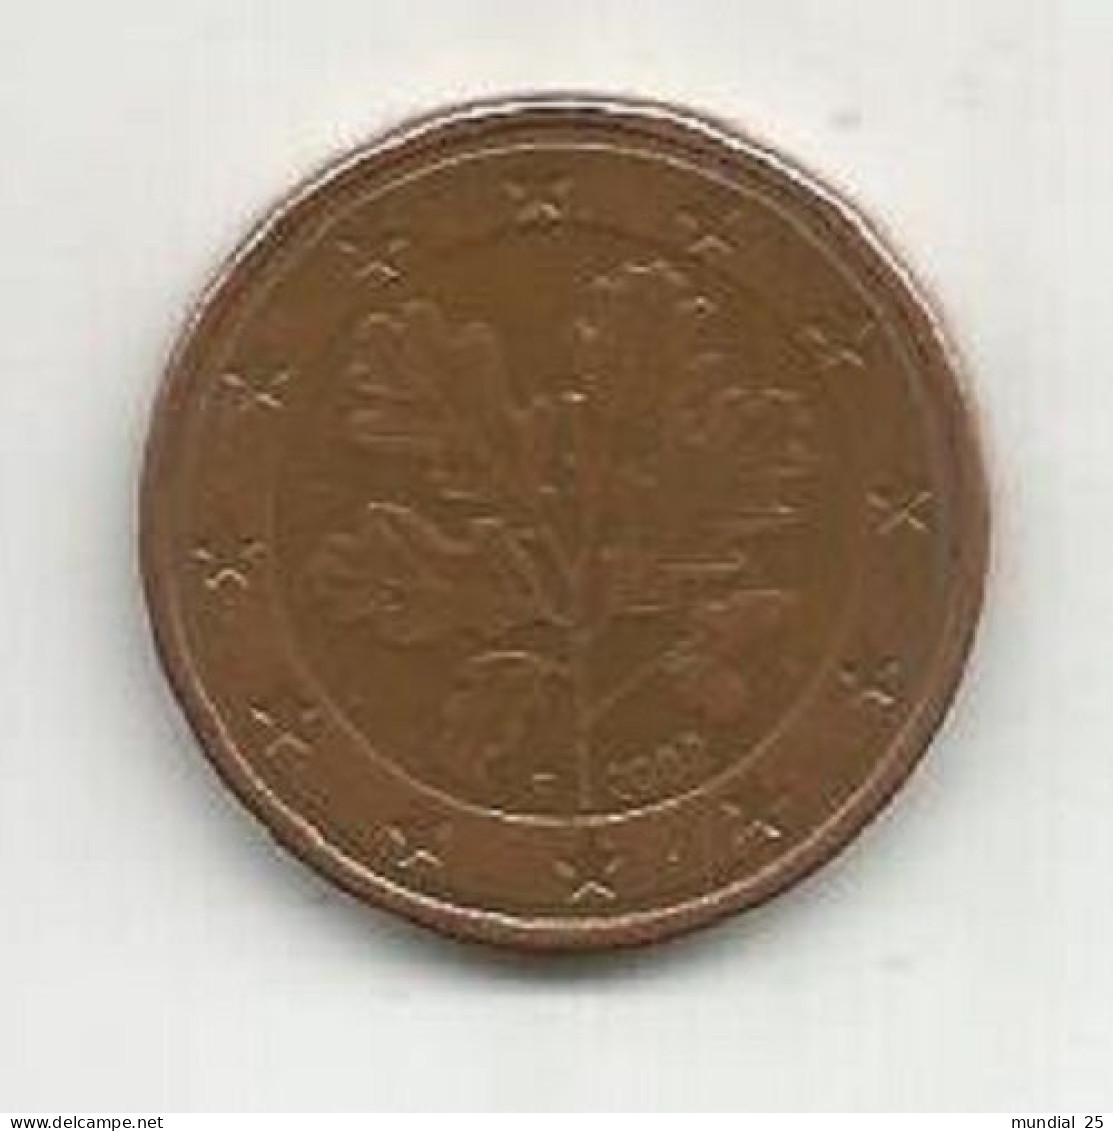 GERMANY 5 EURO CENT 2002 (F) - Germany